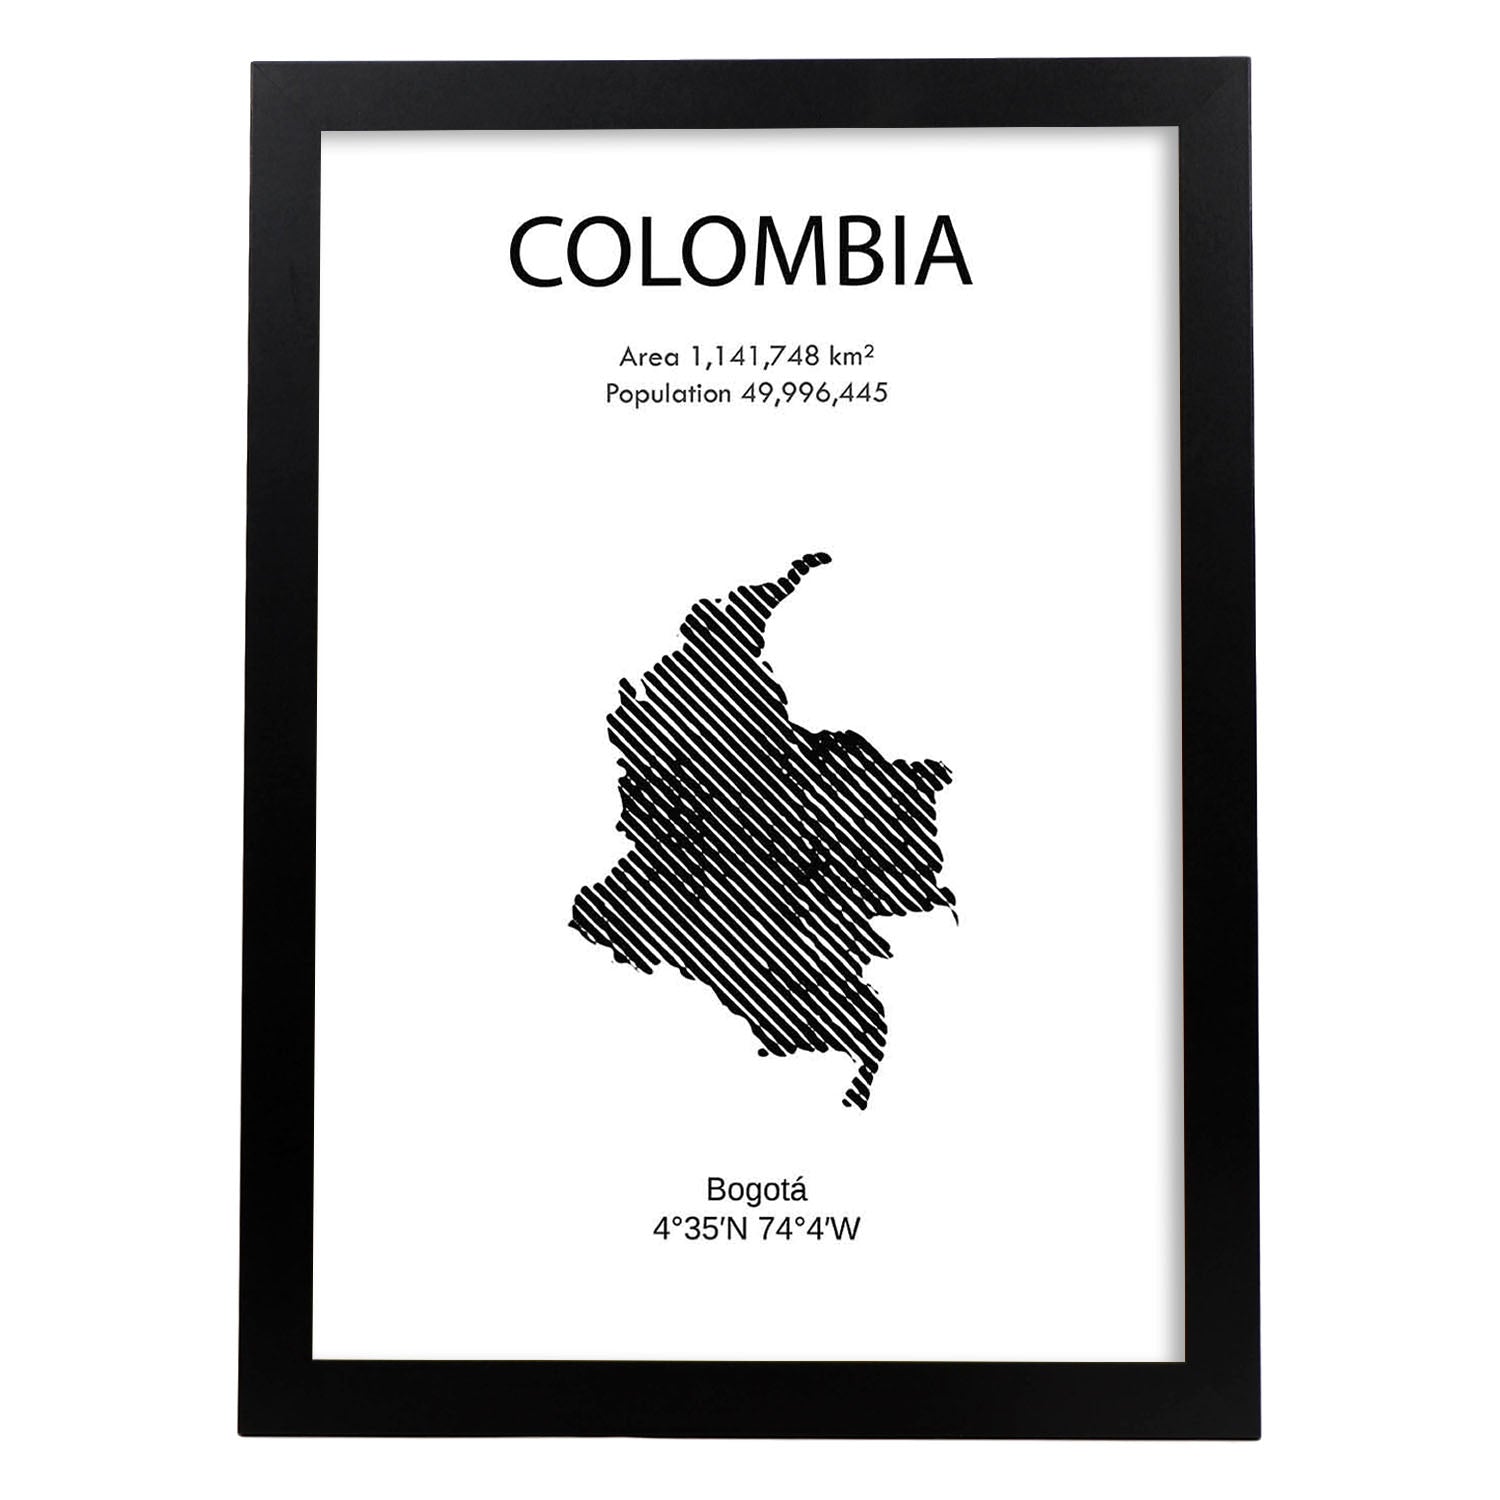 Poster de Colombia. Láminas de paises y continentes del mundo.-Artwork-Nacnic-A3-Marco Negro-Nacnic Estudio SL